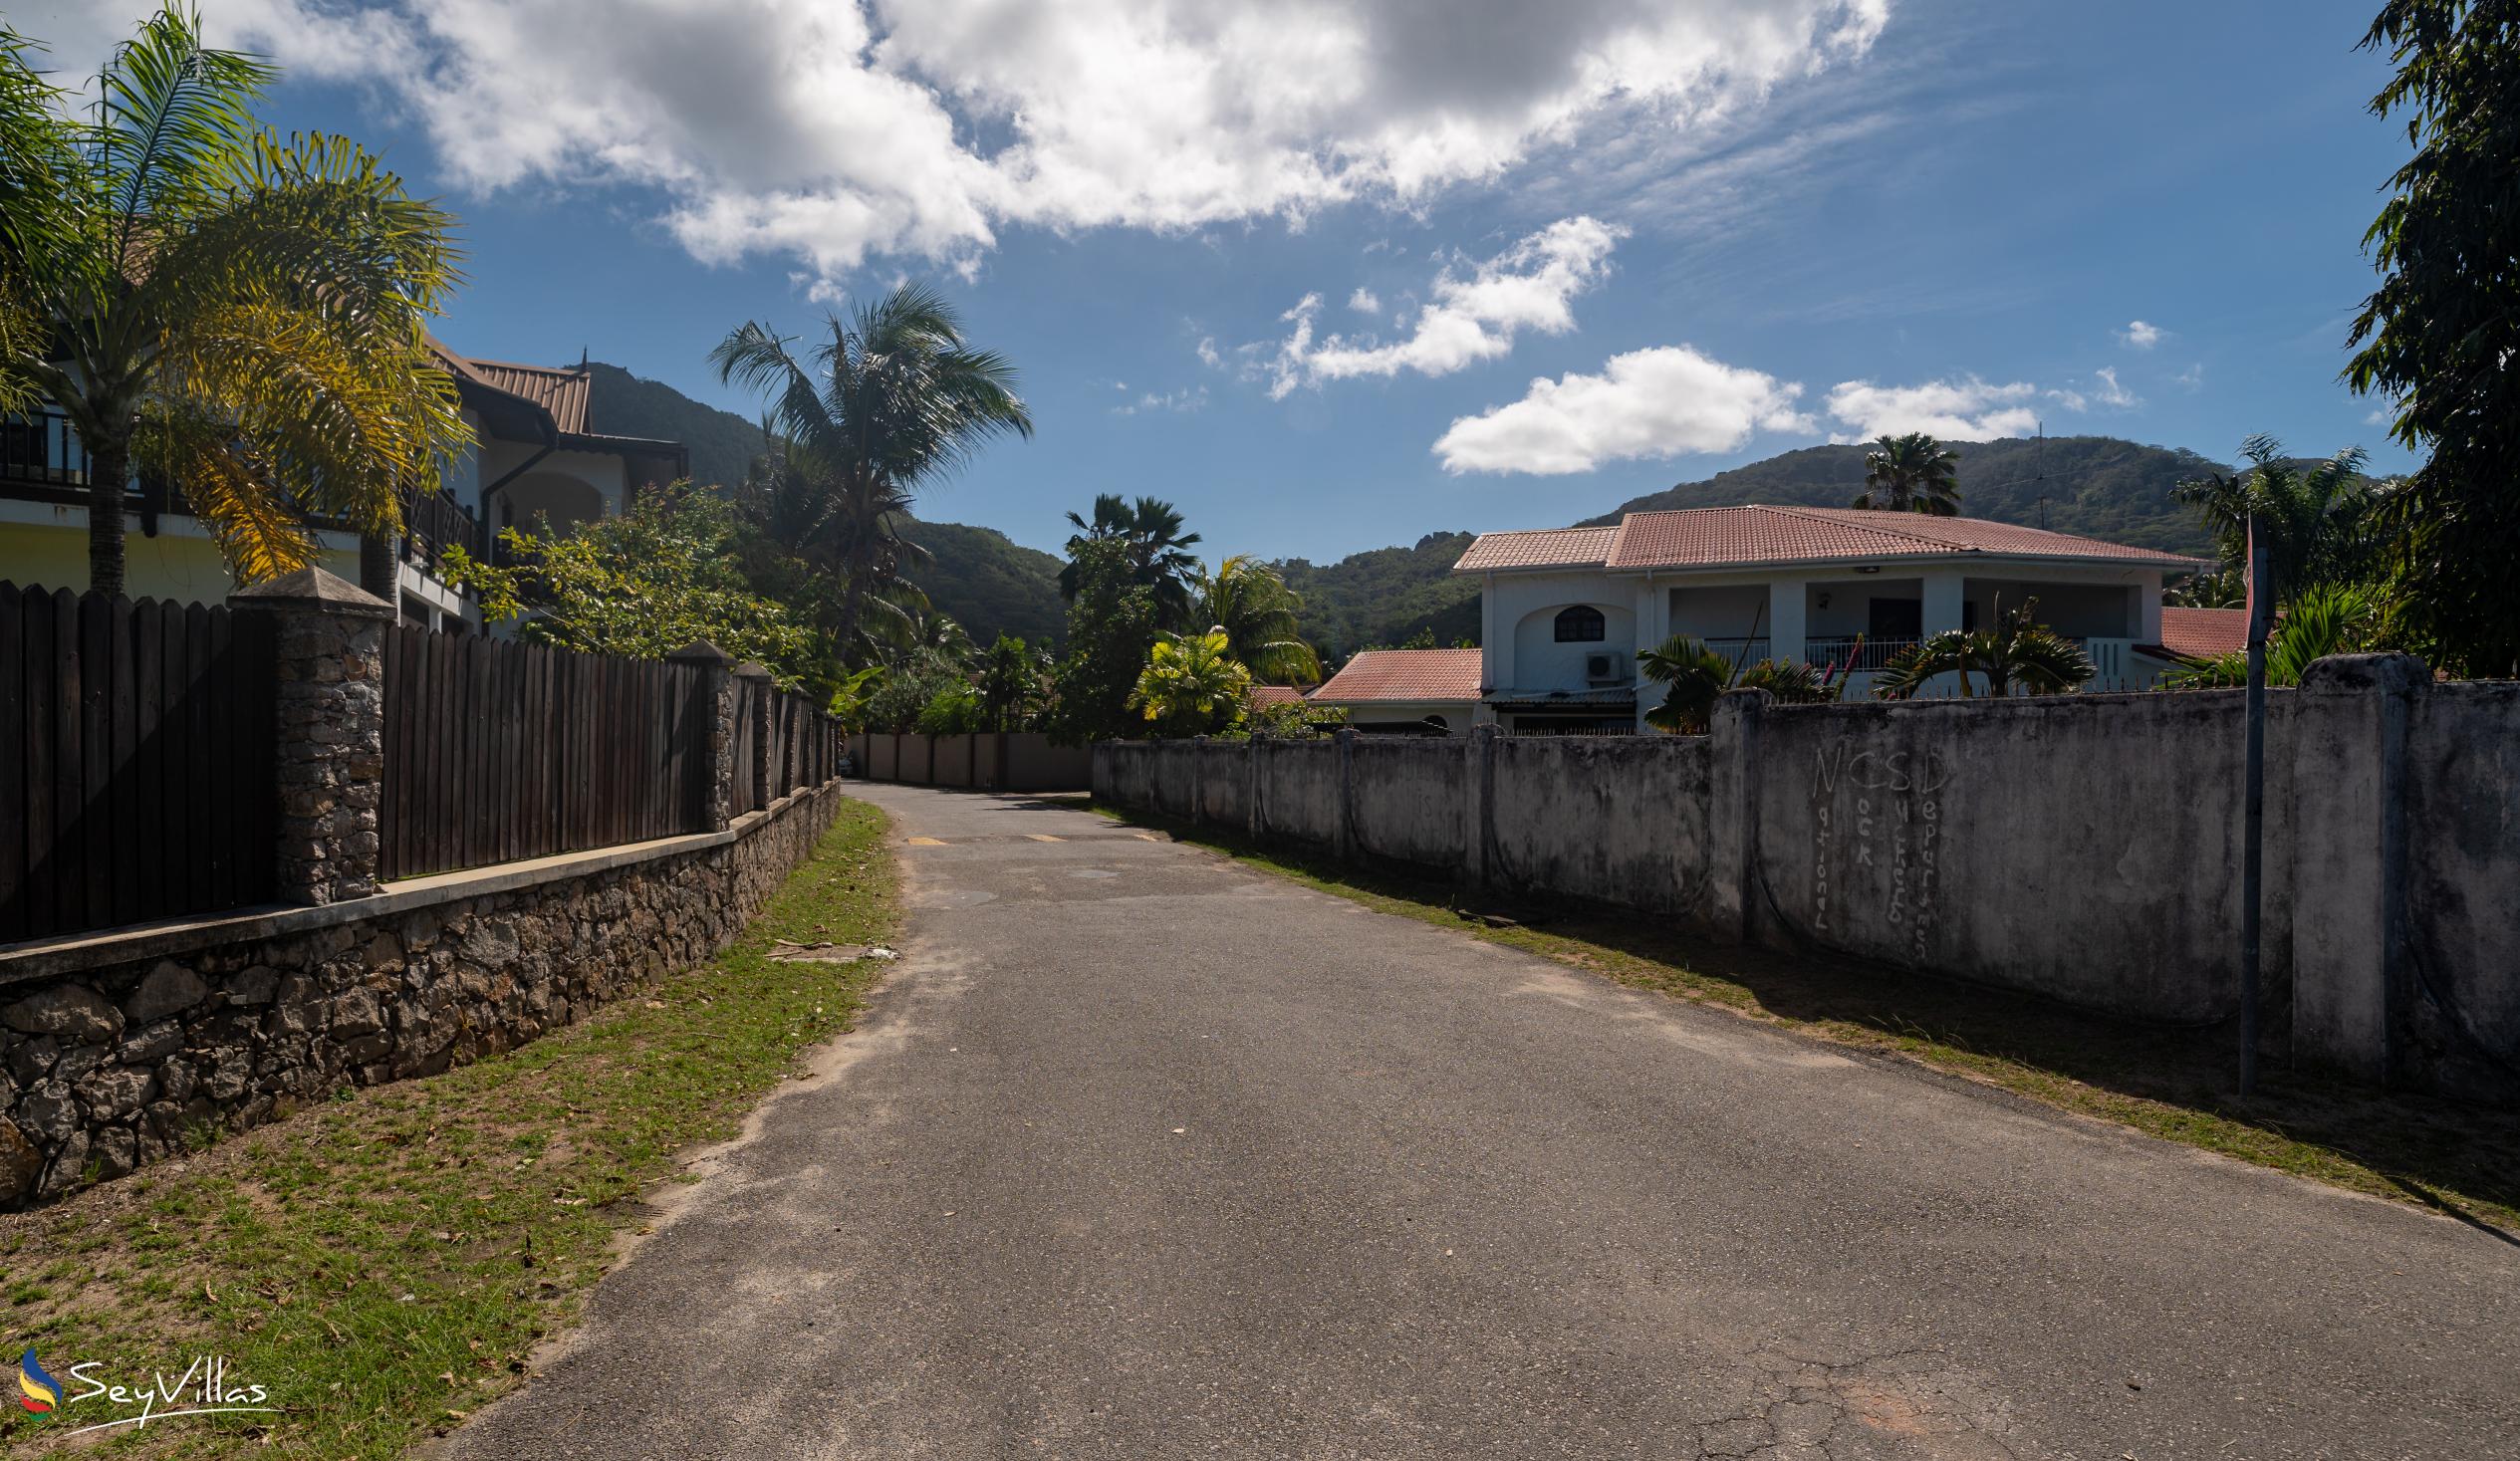 Foto 43: Villa Caballero - Lage - Mahé (Seychellen)